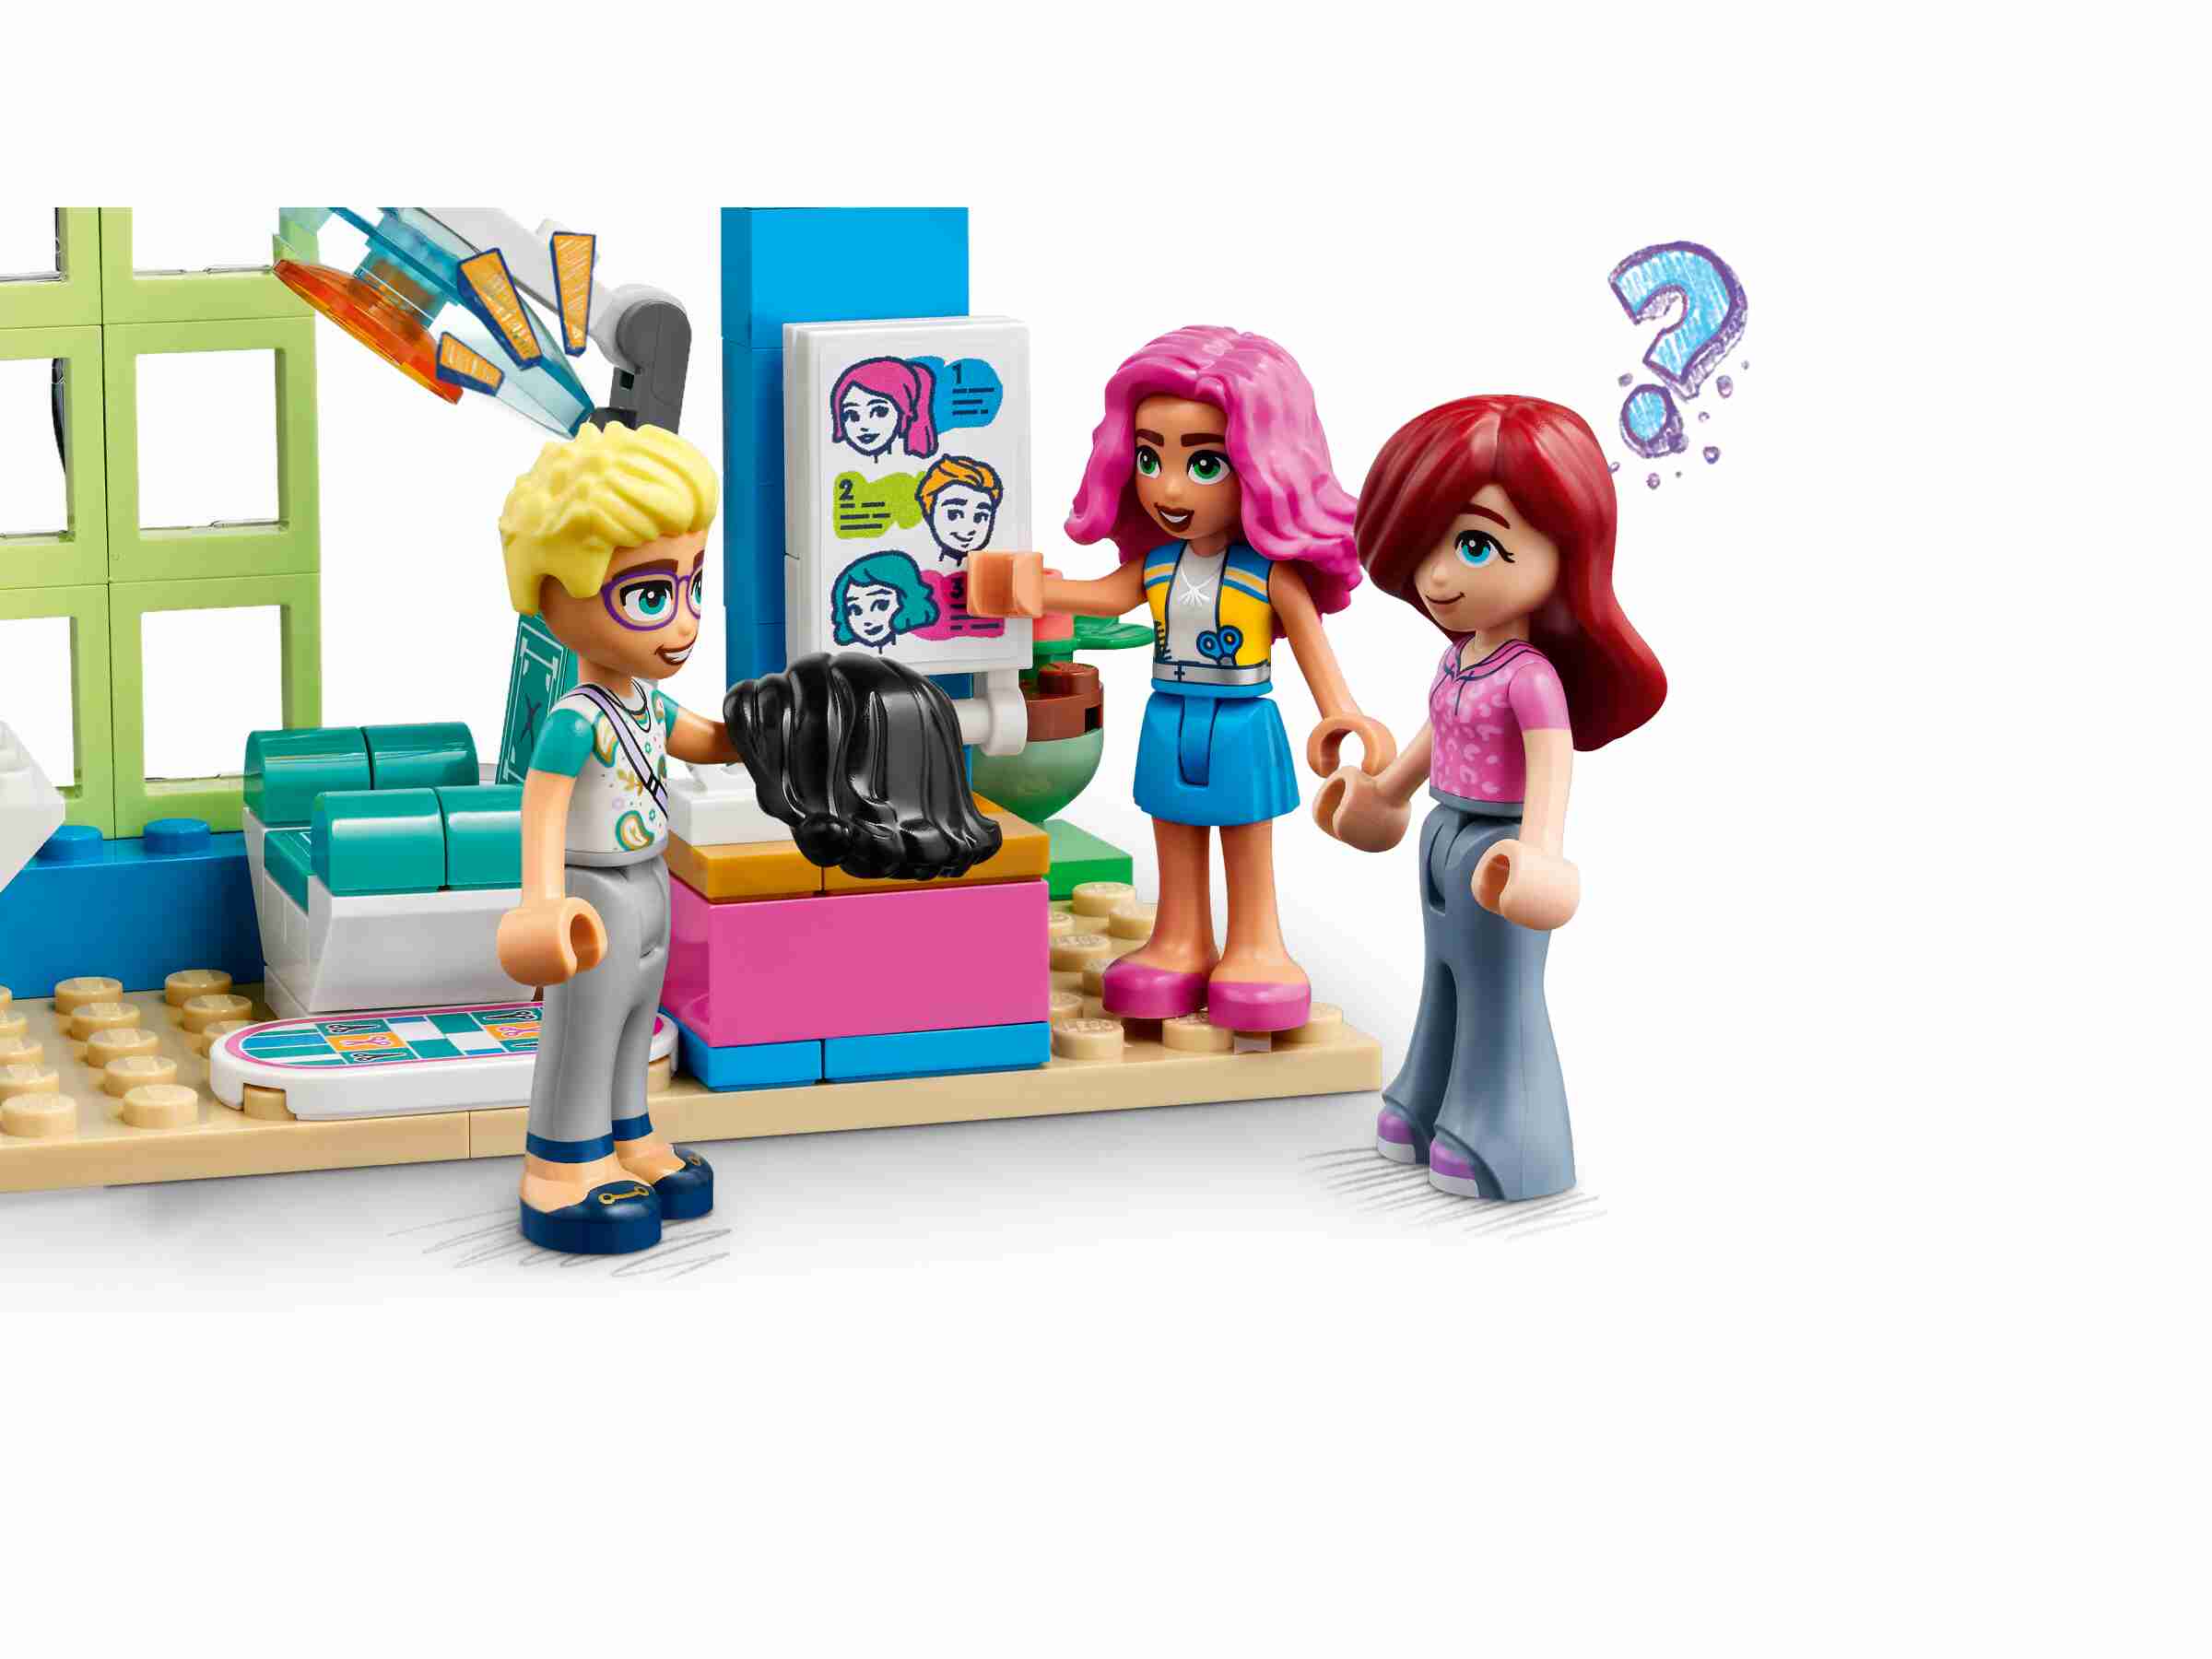 LEGO 41743 Friends Friseursalon, Spielfiguren Paisley, Olly und Nadia